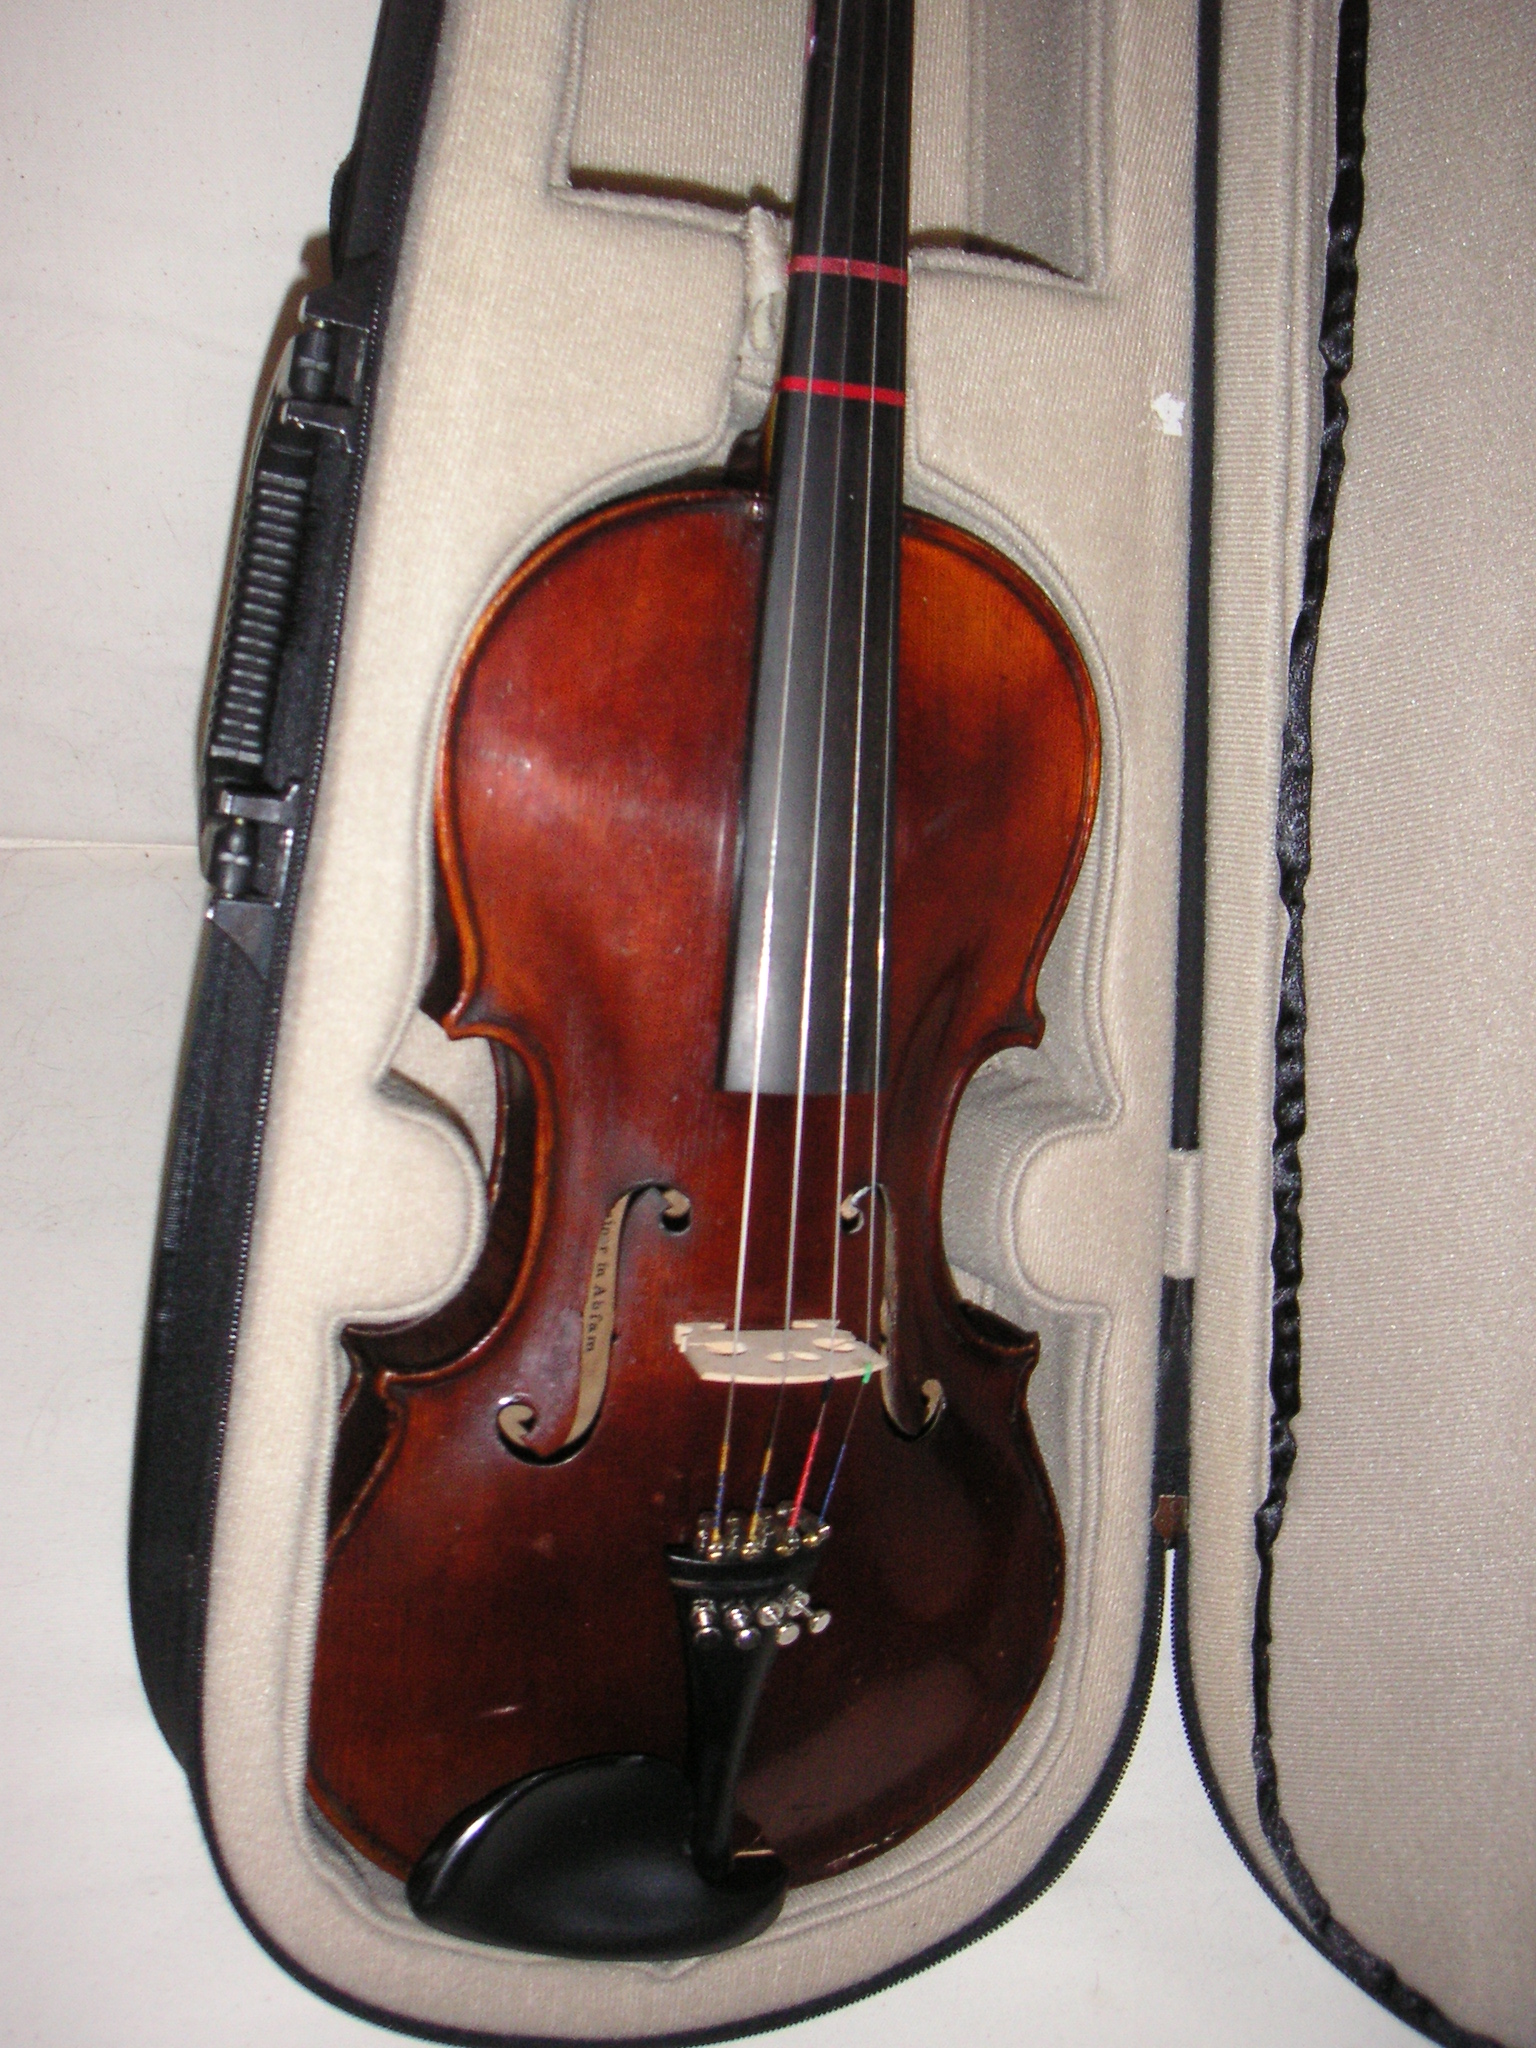 a violin in an orange case sitting open